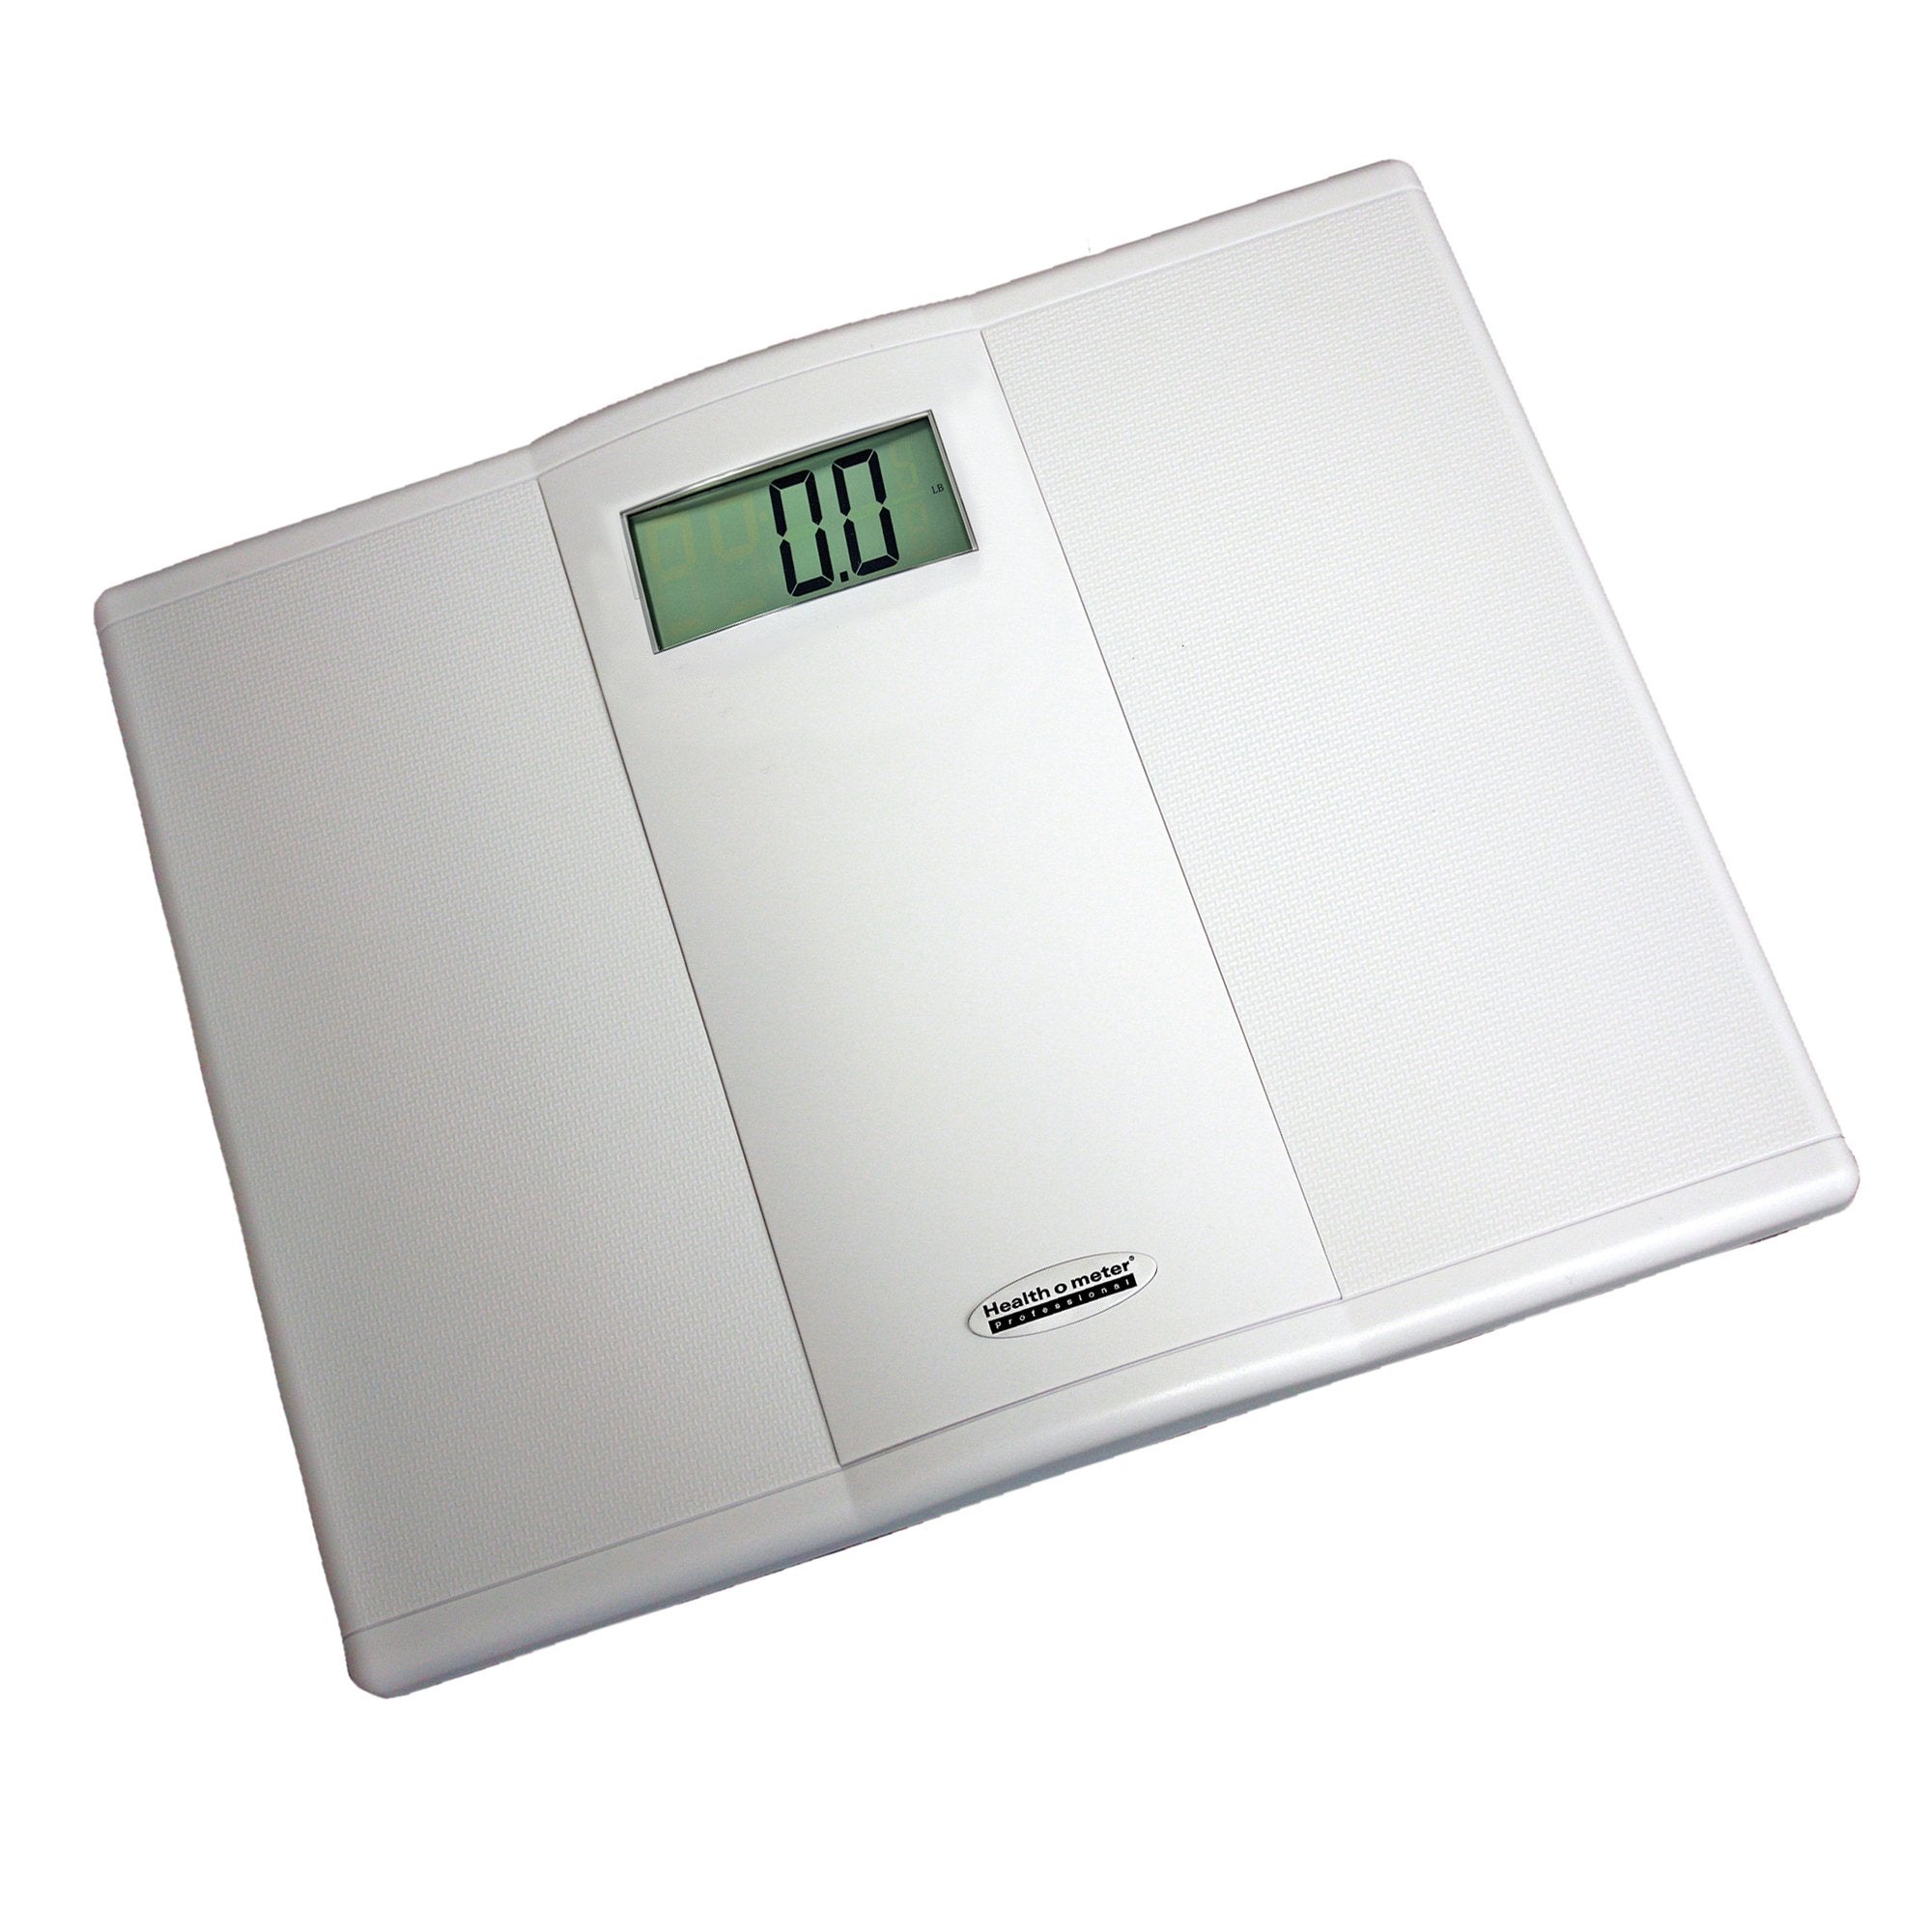 Floor Scale Health O Meter Digital Audio Display 400 lbs. / 180 kg Capacity White Battery Operated